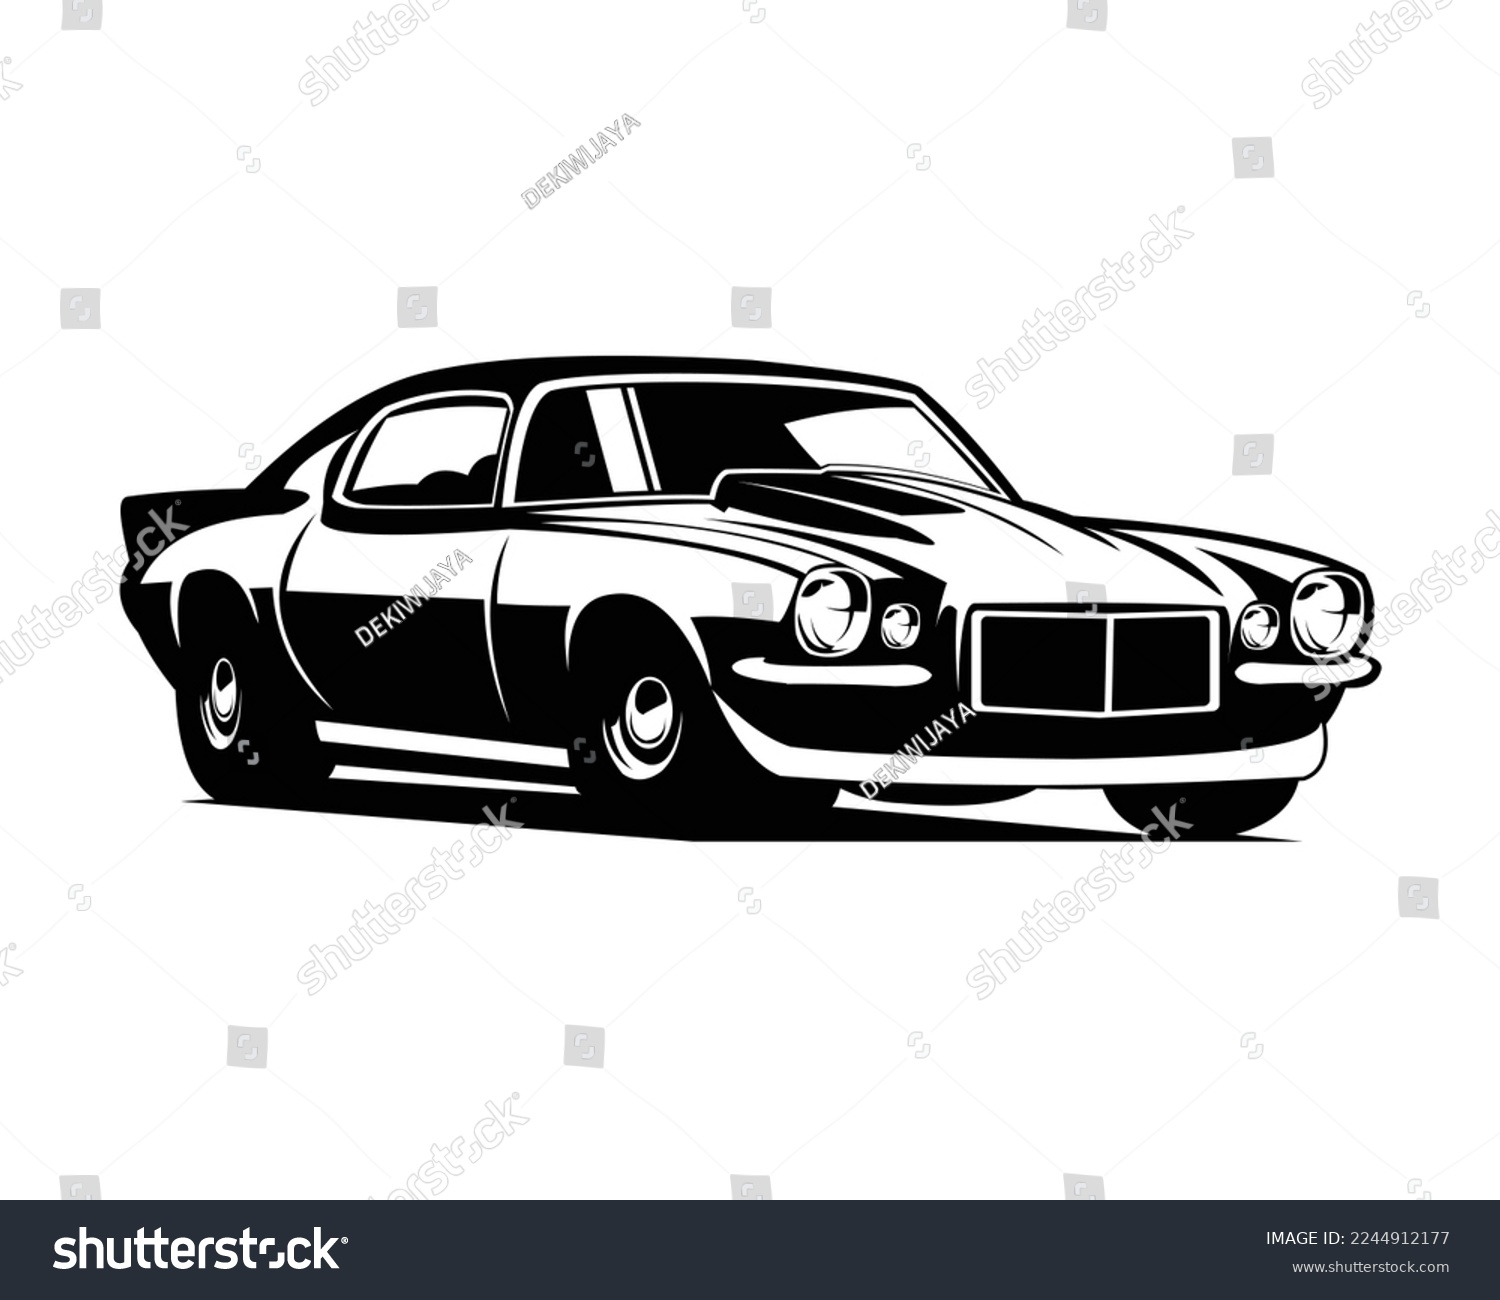 SVG of Chevy Camaro car logo. vector illustration silhouette design. Best for badge, emblem, icon and sticker design. svg